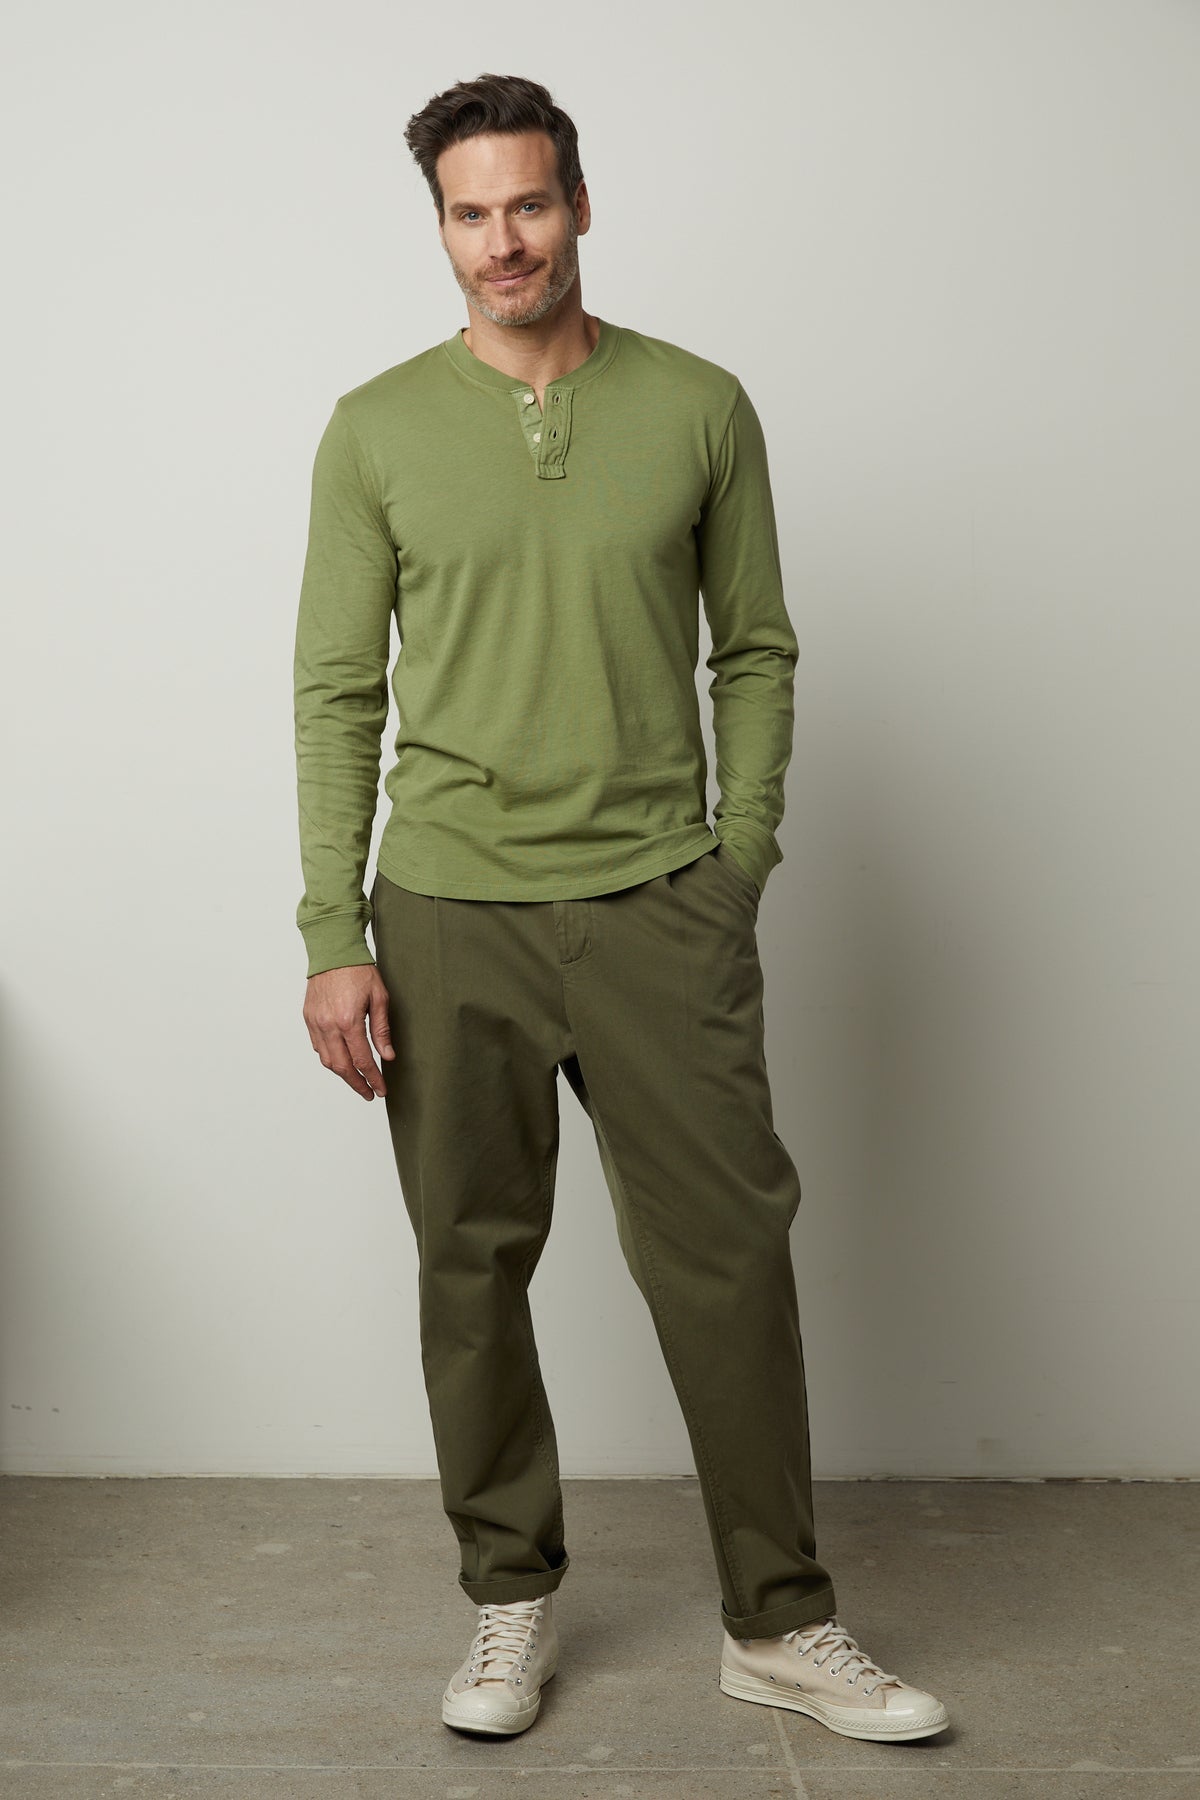 A man wearing a Velvet by Graham & Spencer BRADEN HENLEY shirt and khaki pants.-35567416672449